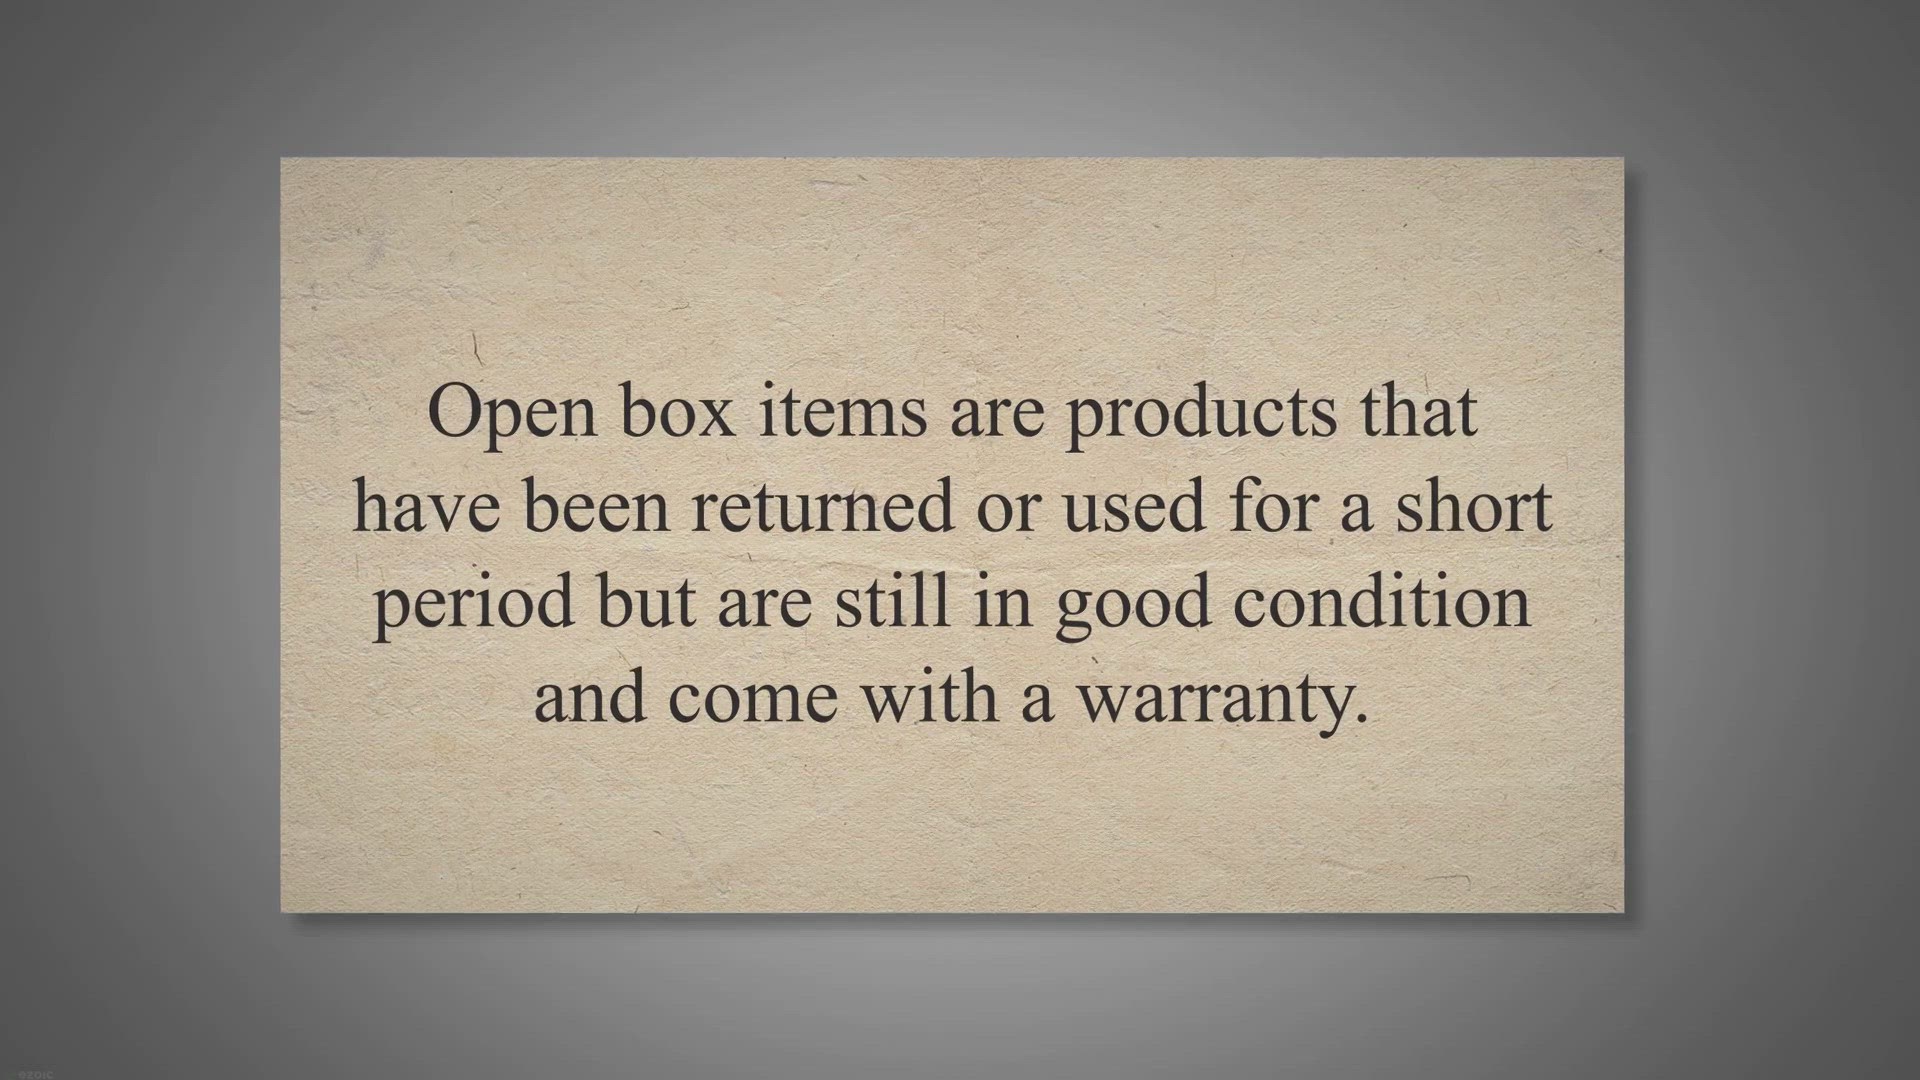 Is Best Buy Open Box Excellent Worth It? - CFAJournal